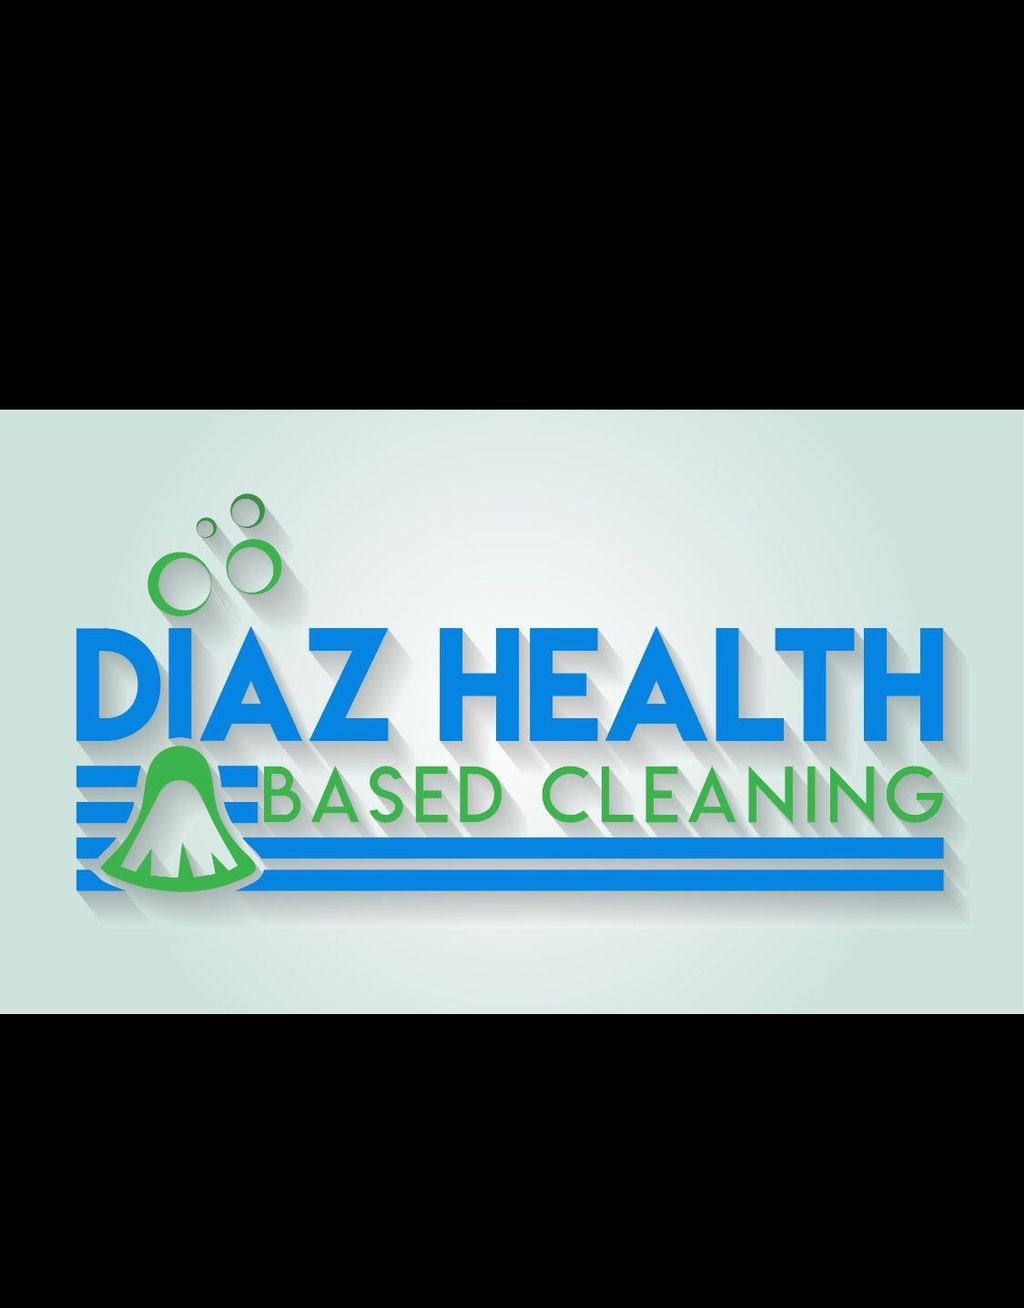 Diaz Health Based Cleaning